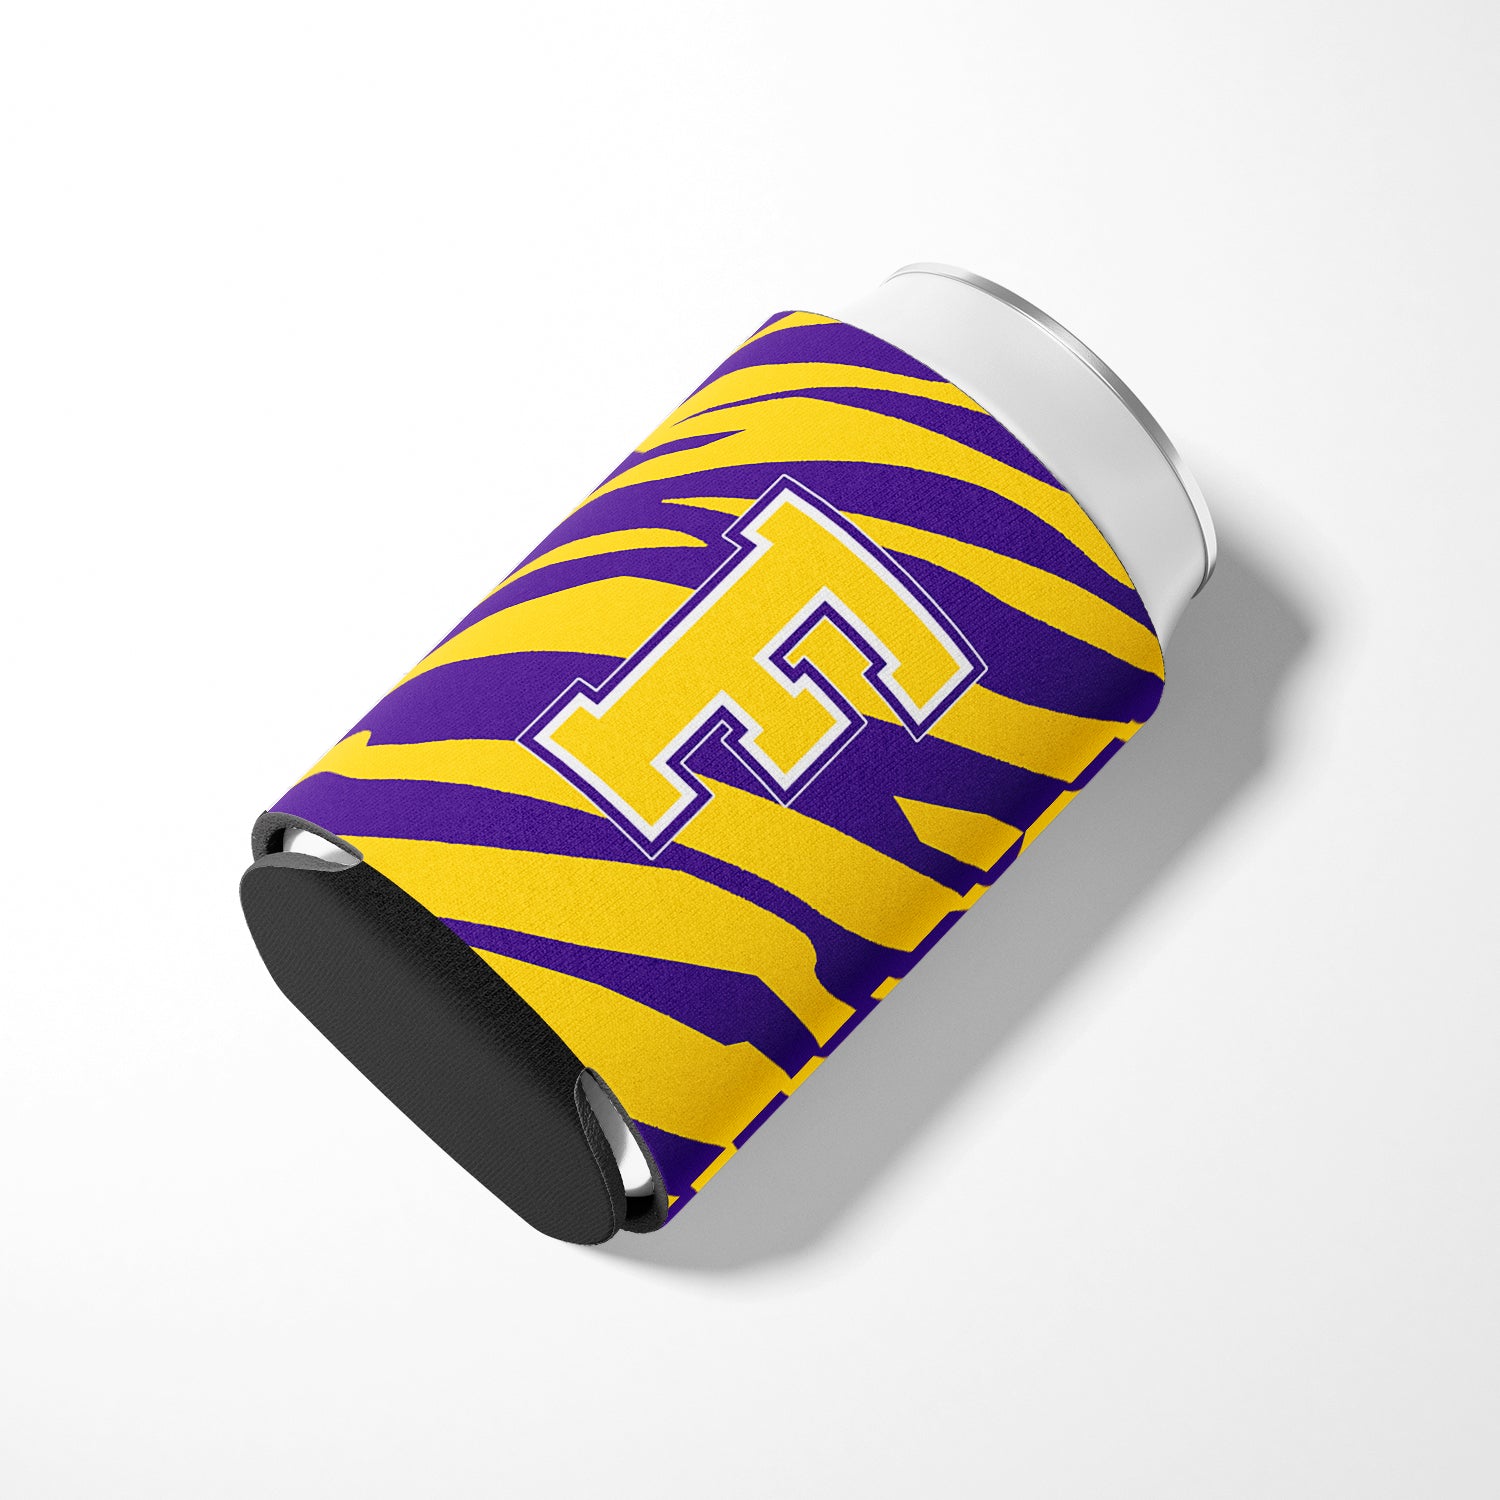 Monogram - Tiger Stripe - Purple Gold Can or Bottle Beverage Insulator Initial F.